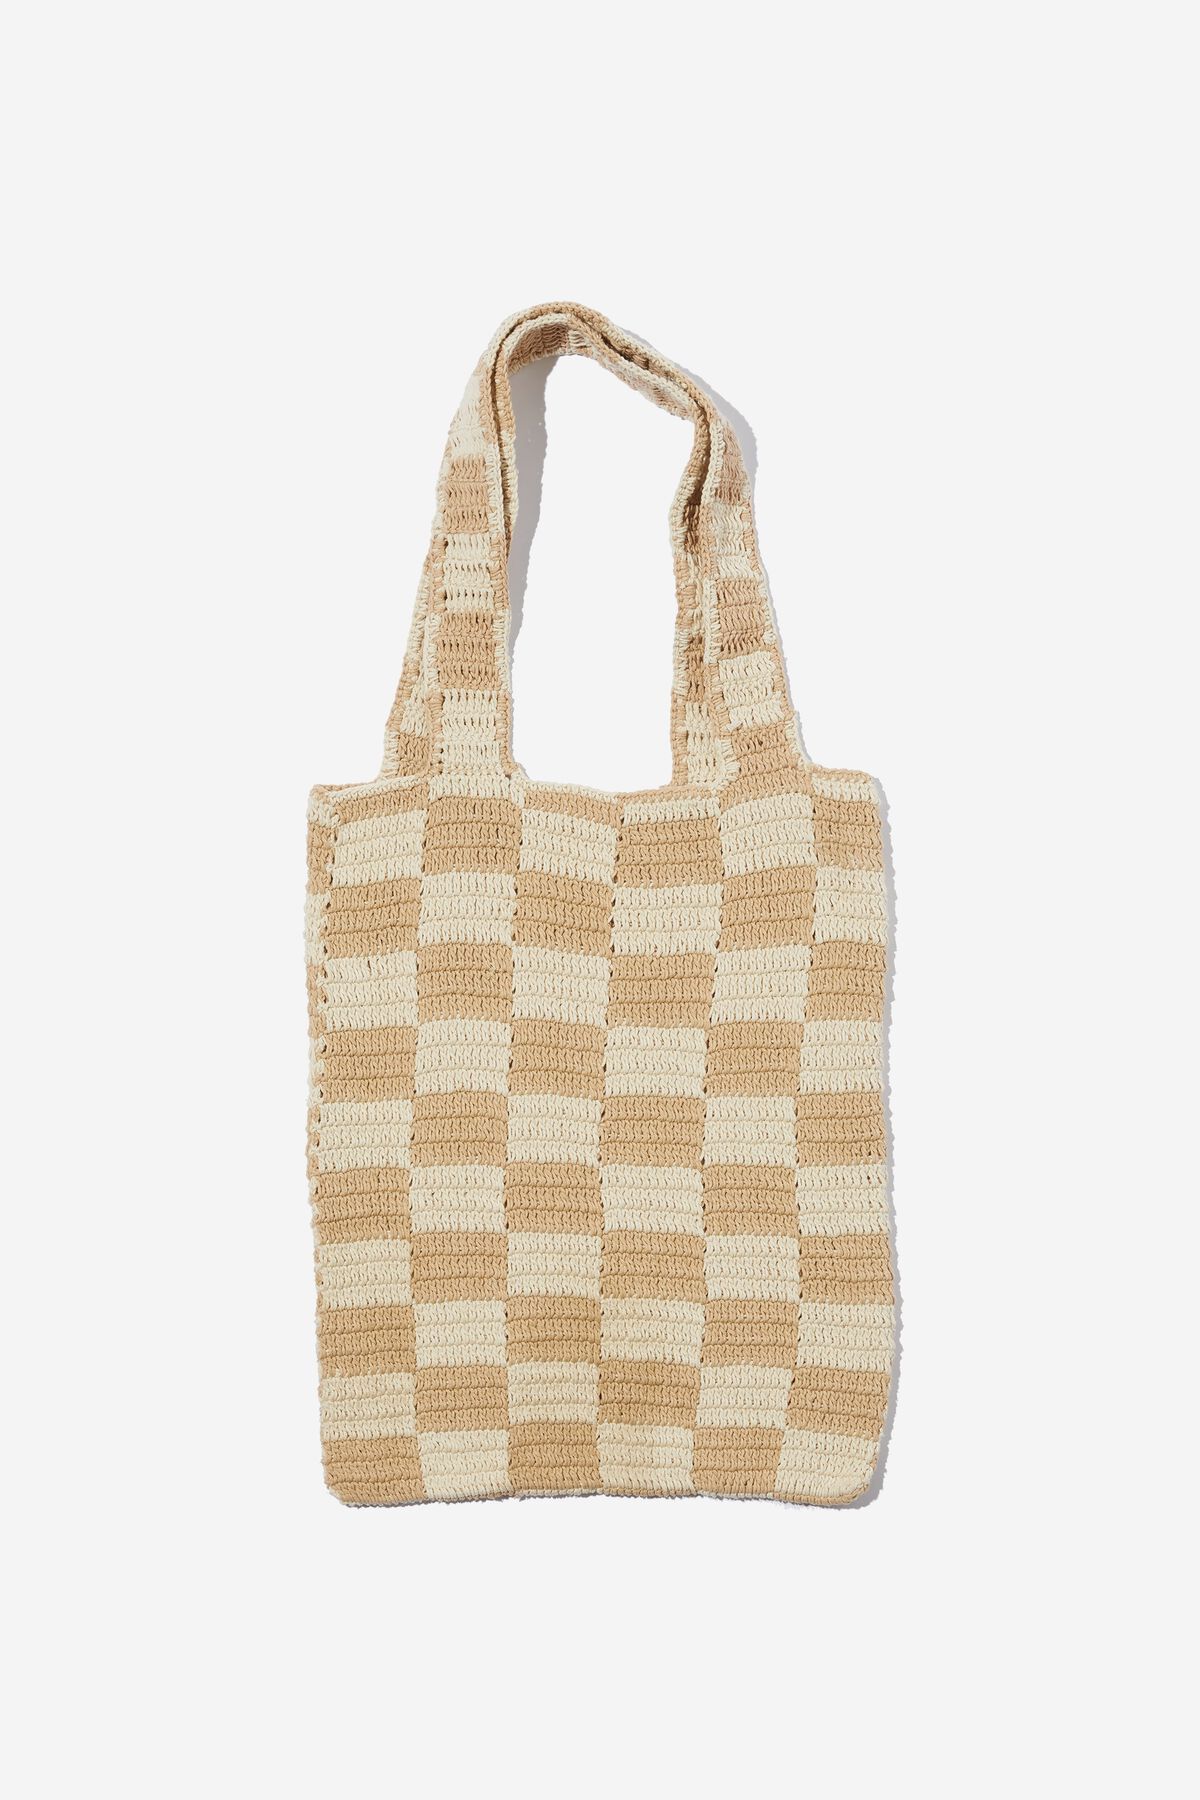 Crochet Tote Bag | Cotton On (ANZ)